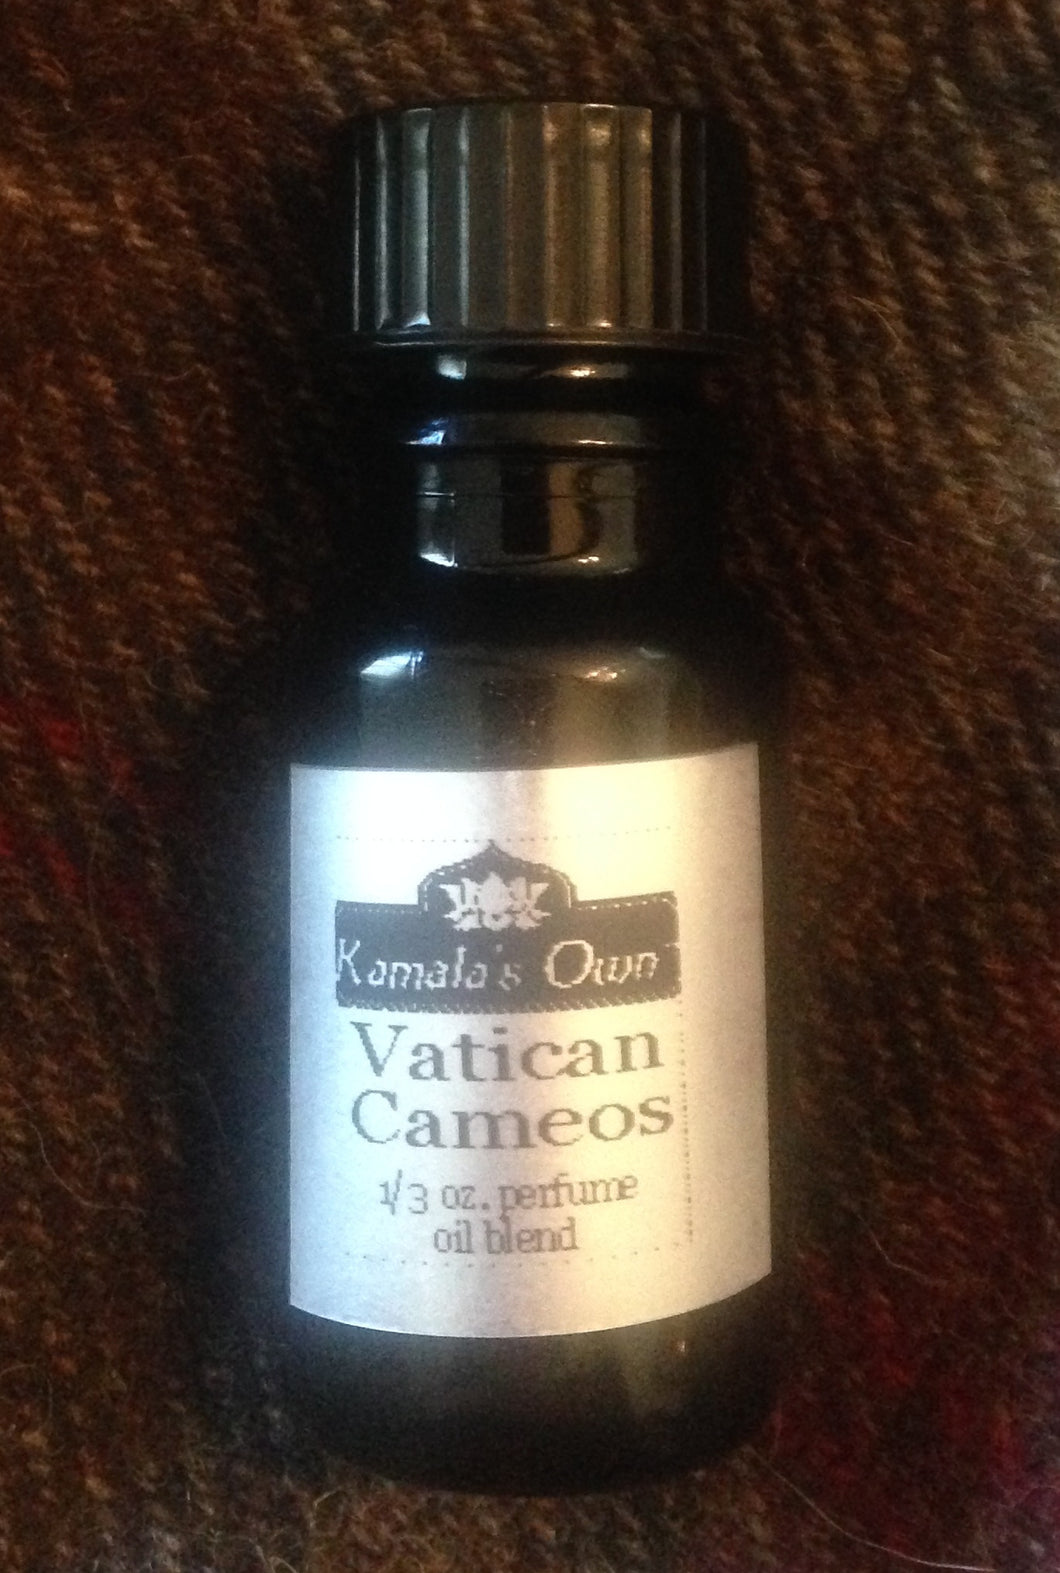 Vatican Cameos perfume oil